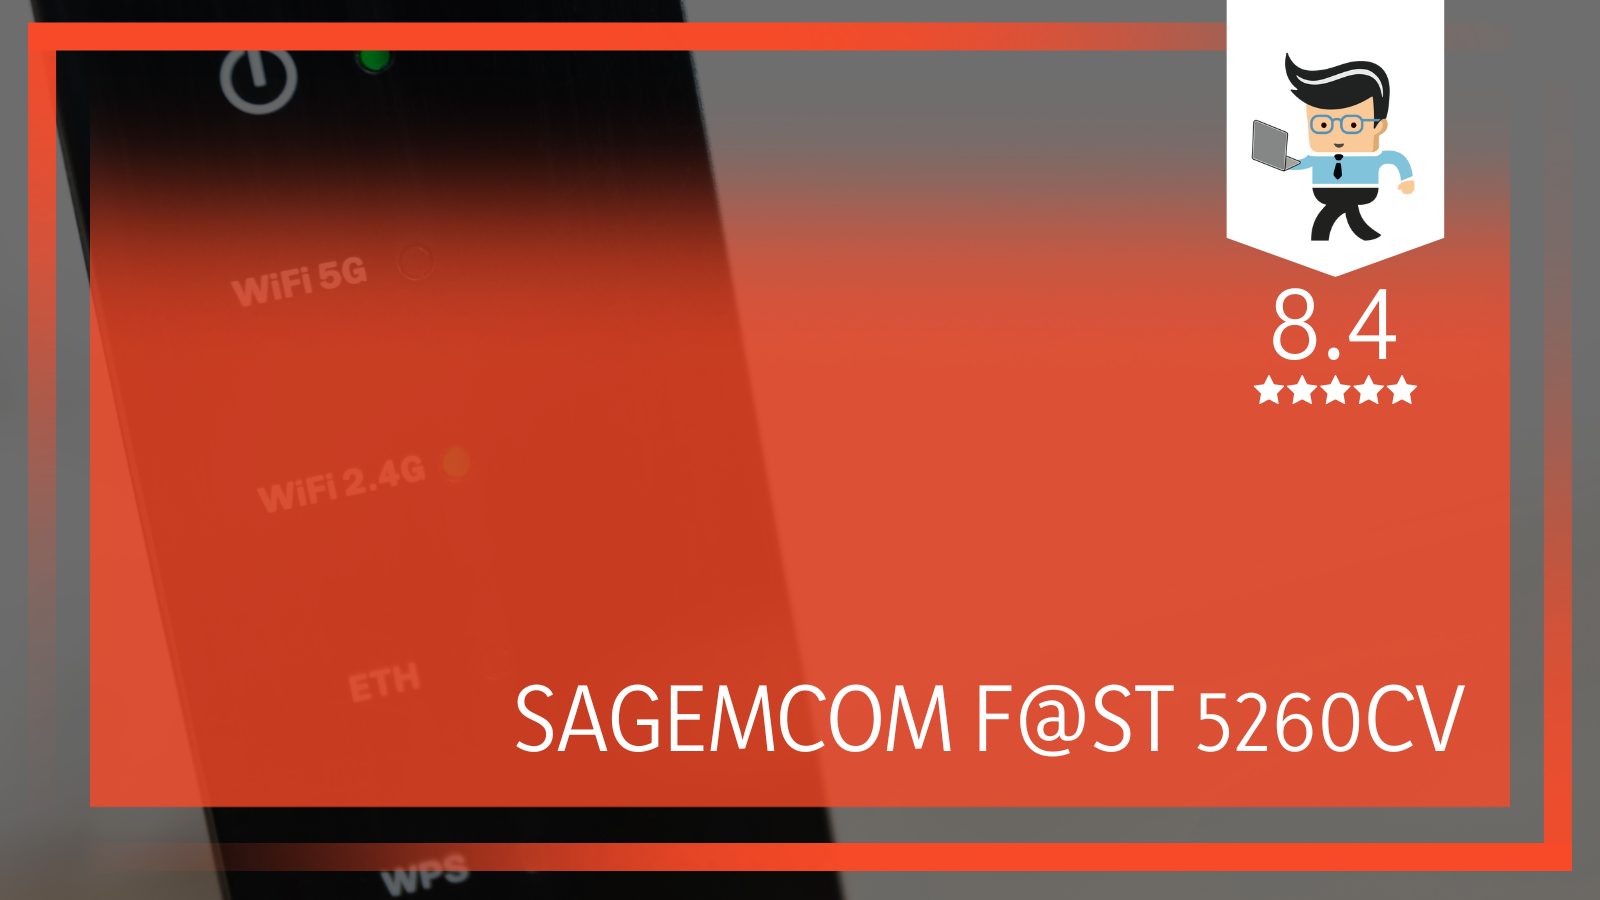 Sagemcom f@st cv connections